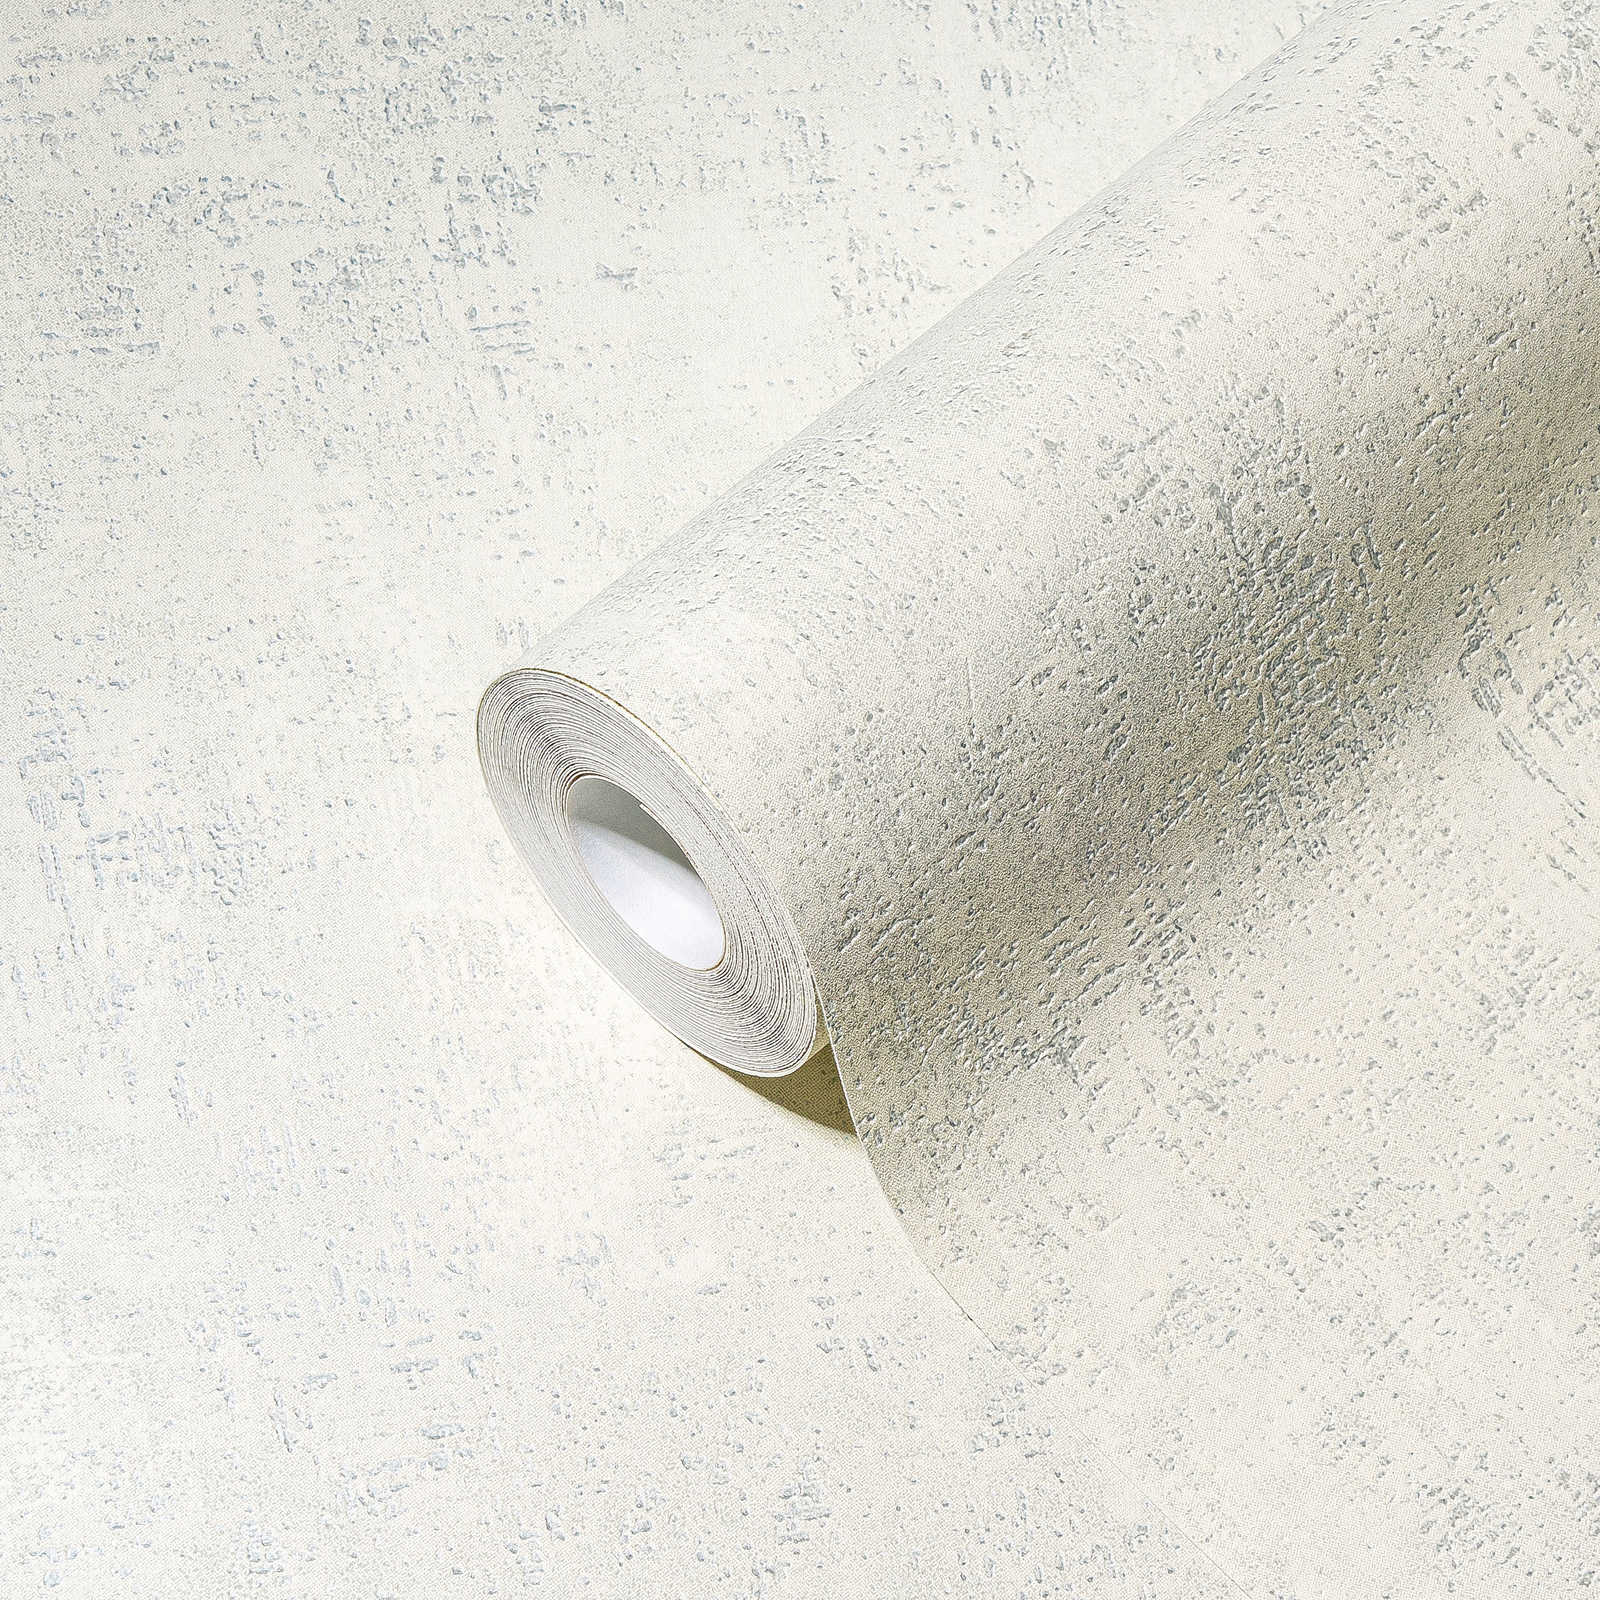             Cream white wallpaper with texture design - cream, metallic
        